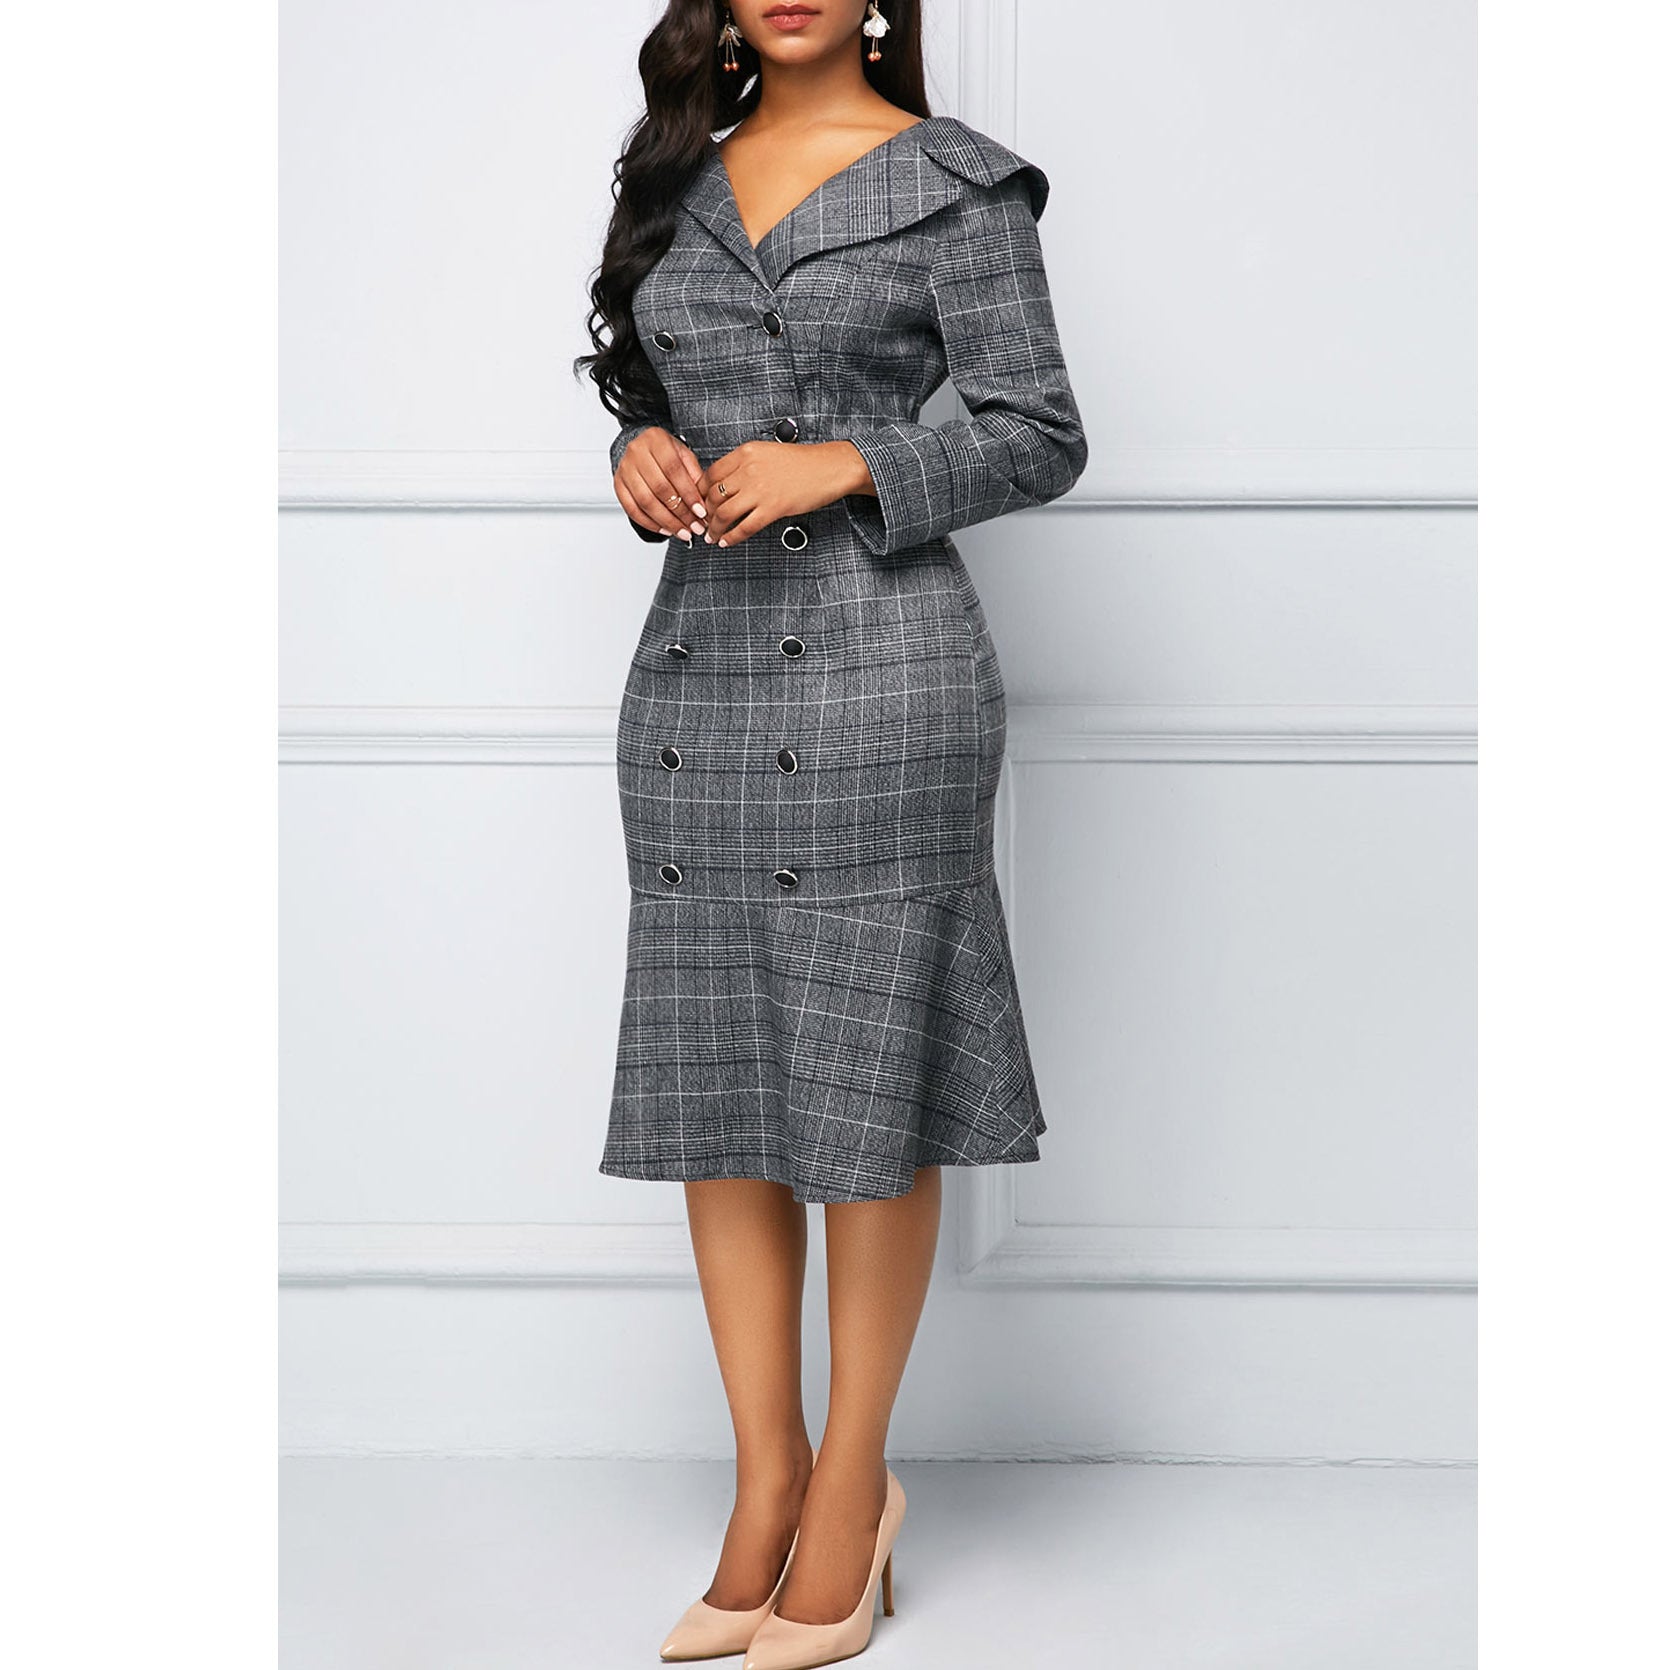 Elegant Office Lady Women Plus Sizes Dresses-Dresses-Purple-S-Free Shipping Leatheretro